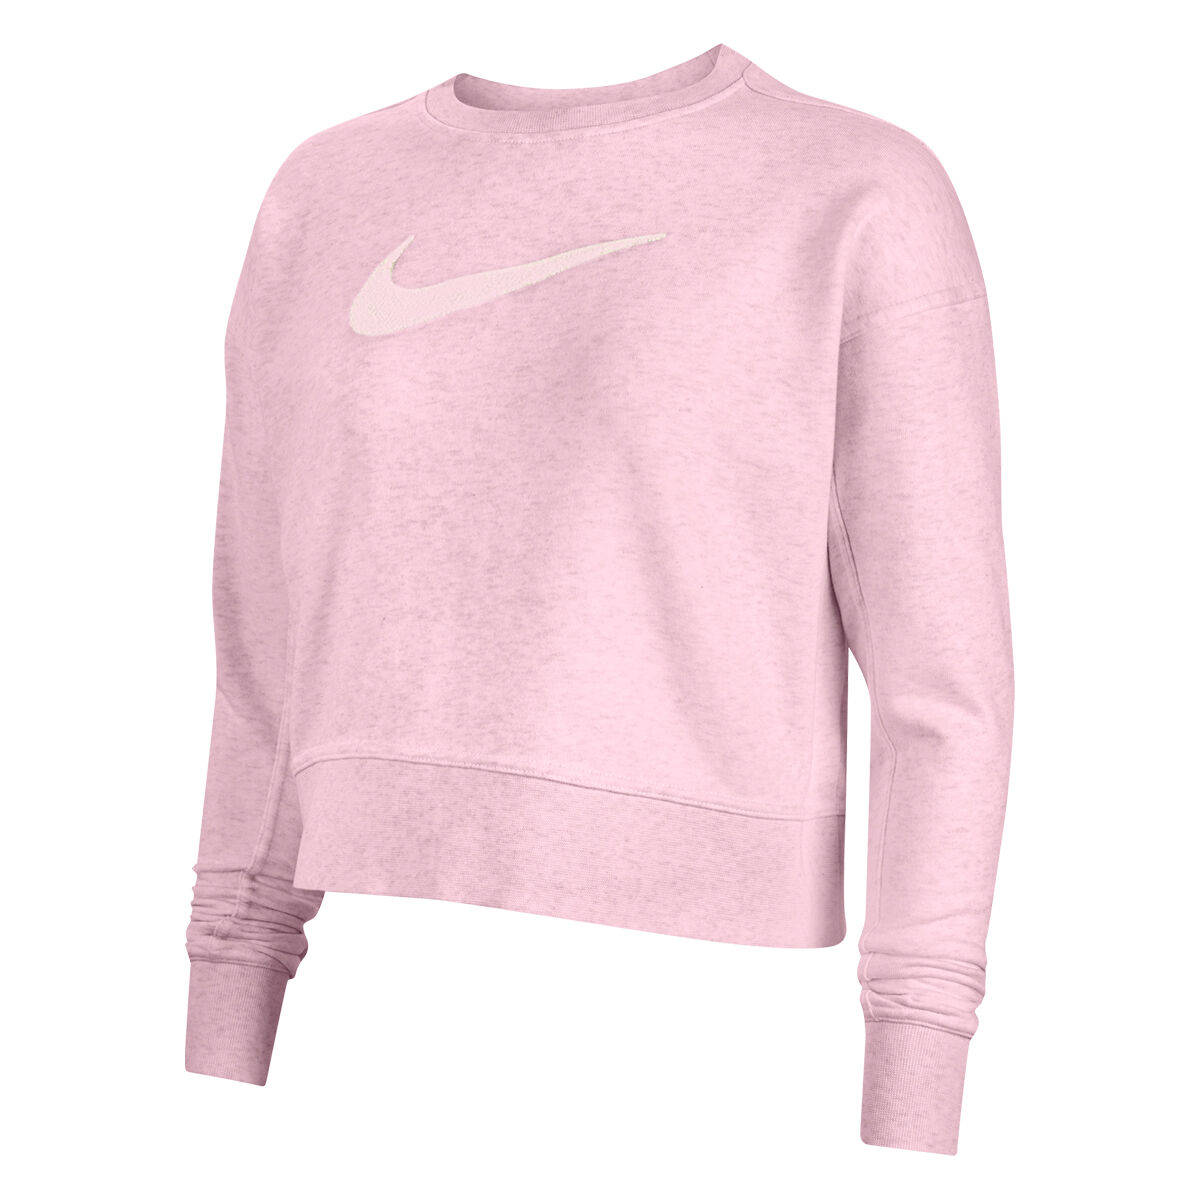 hot pink nike sweater